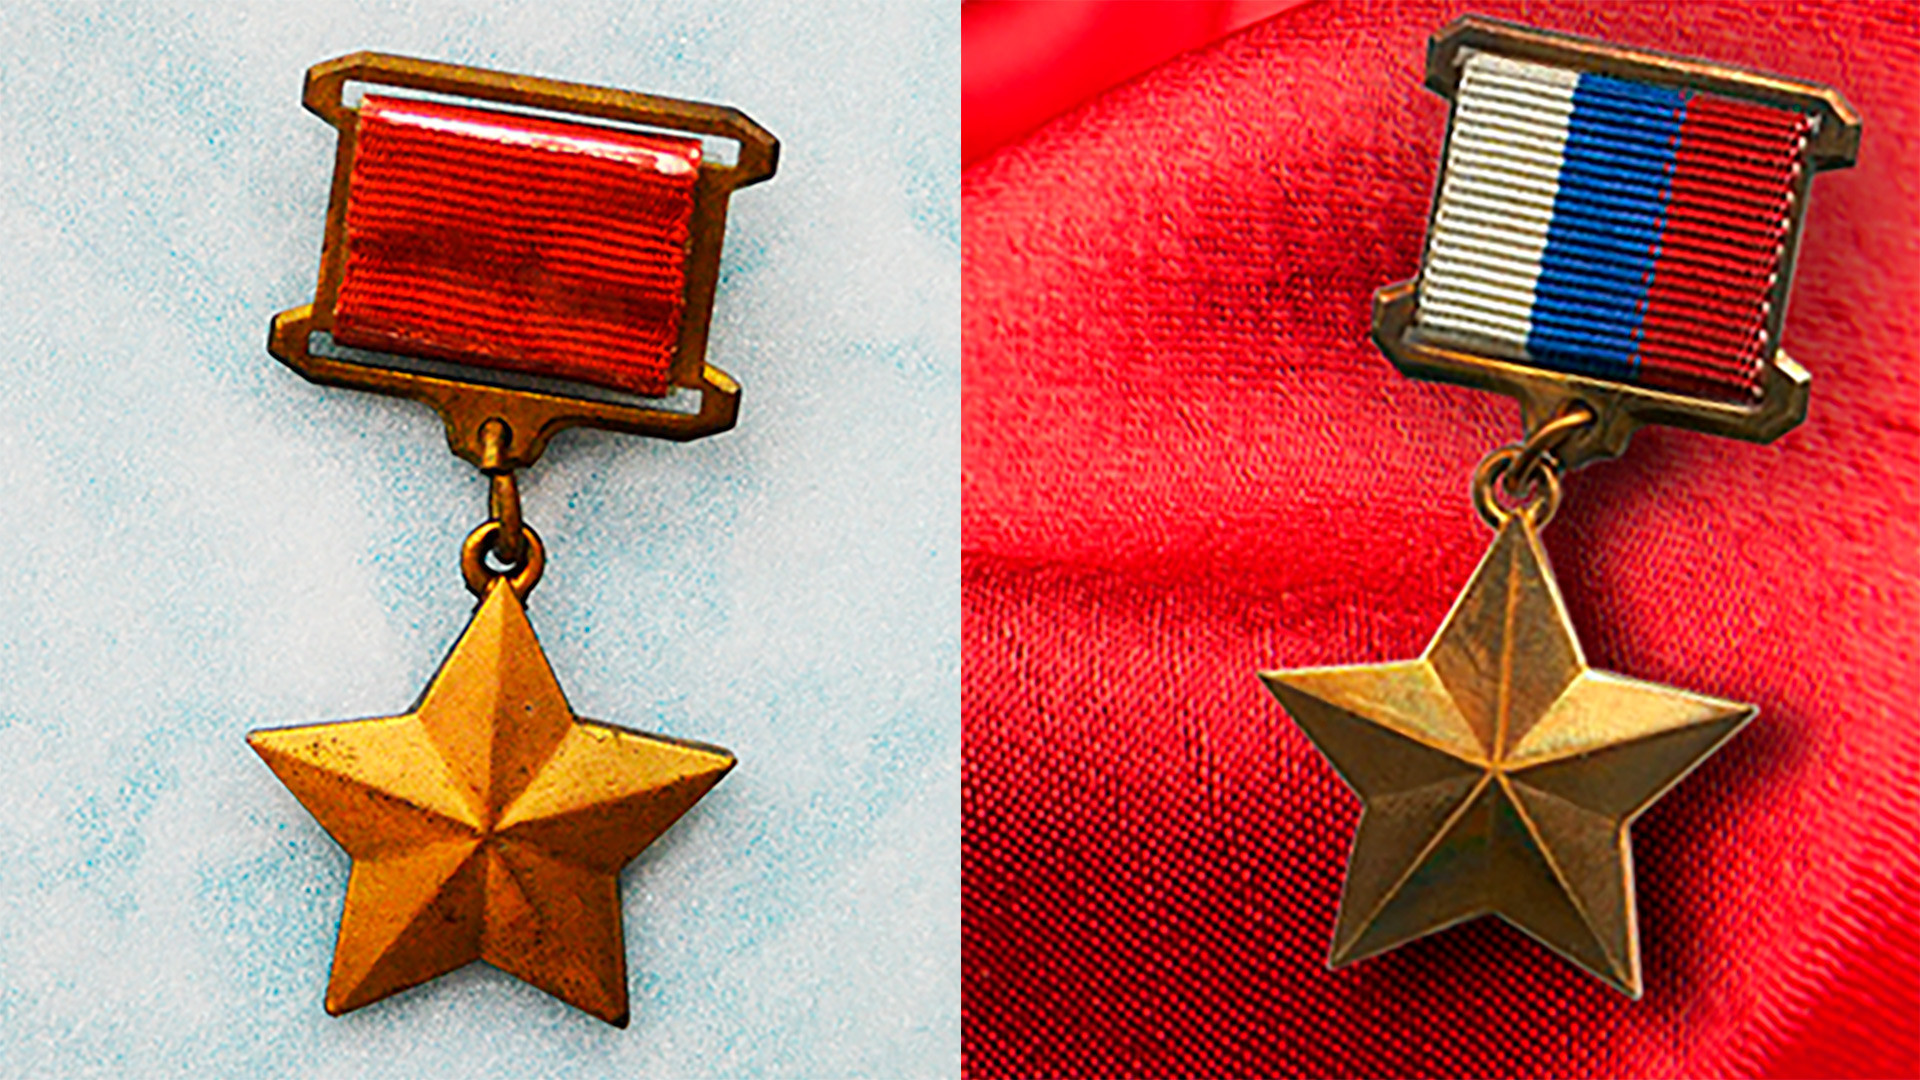 Bintang Emas untuk Pahlawan Negara Uni Soviet dan Pahlawan Negara Federasi Rusia